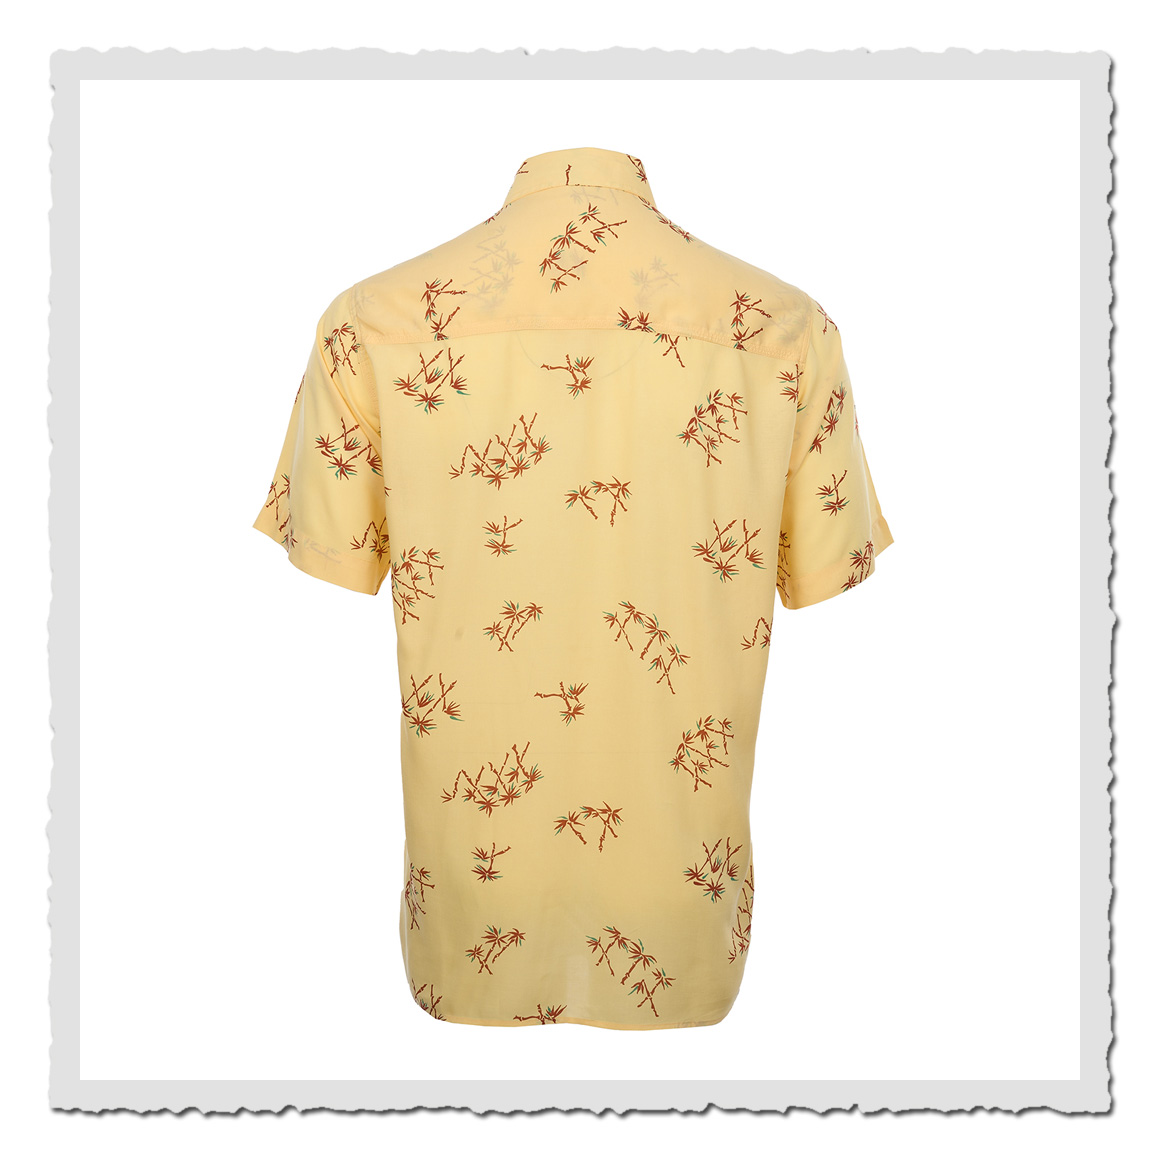 1937 Roamer Shirt short sleeve Bamboo yellow